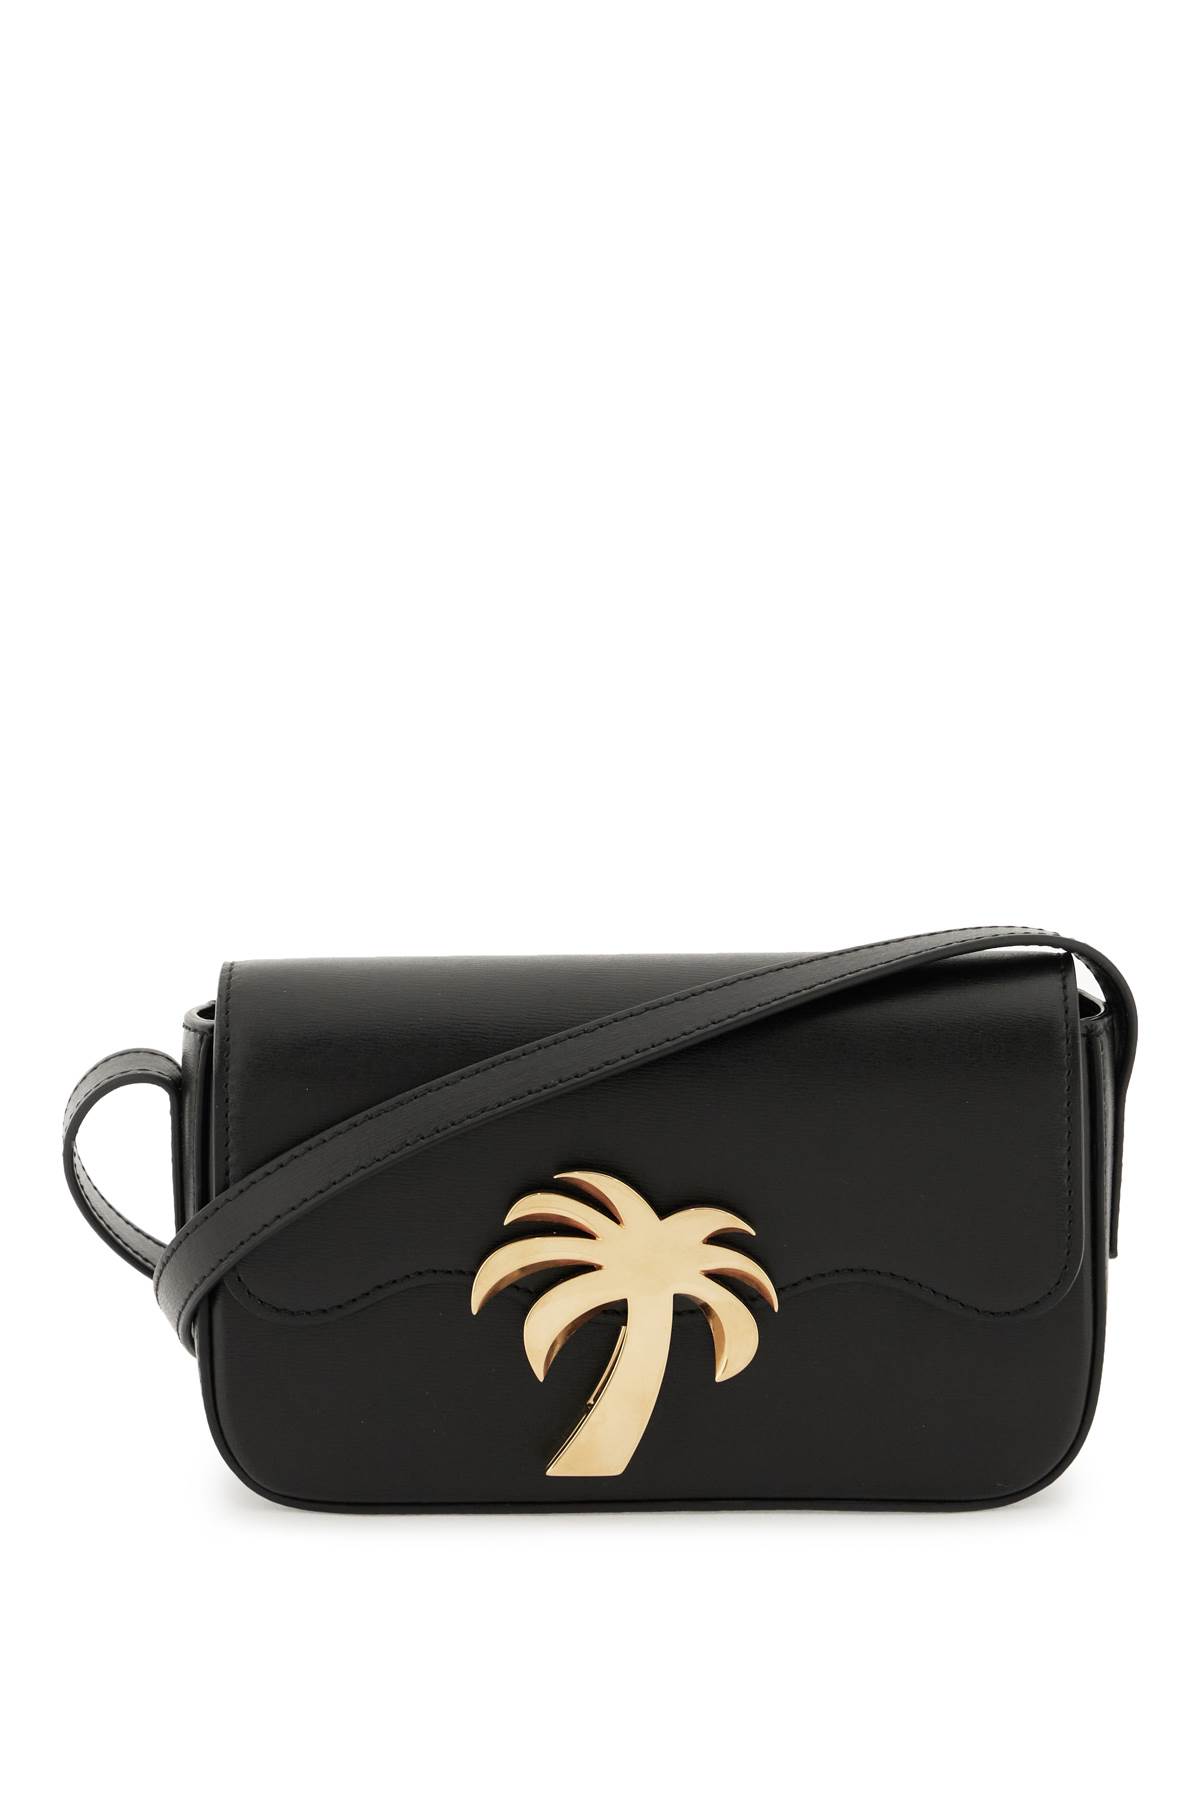 Palm Angels Palm Beach Bridge Bag In Black Gold (black)